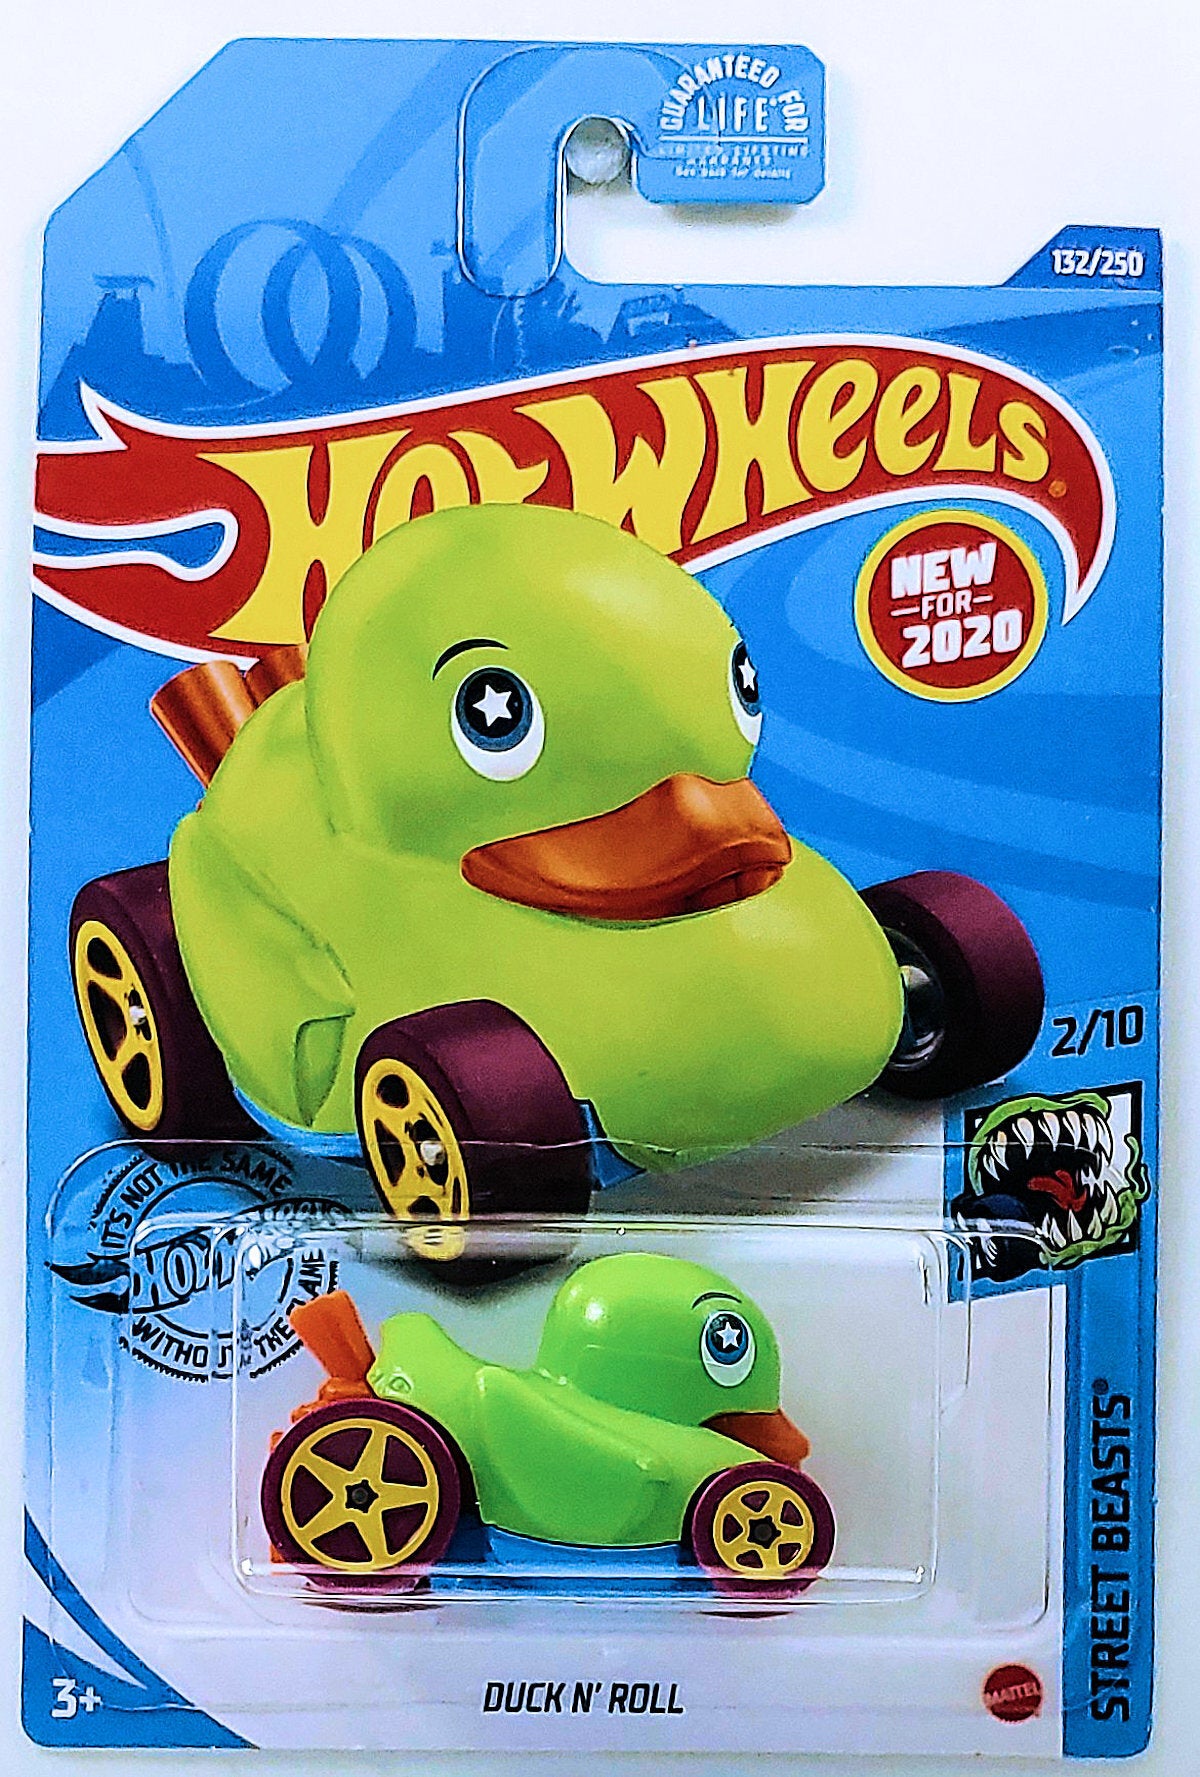 Hot Wheels 2020 - Collector # 132/250 - Street Beasts 2/10 - New Models - Duck N' Roll - Green - USA